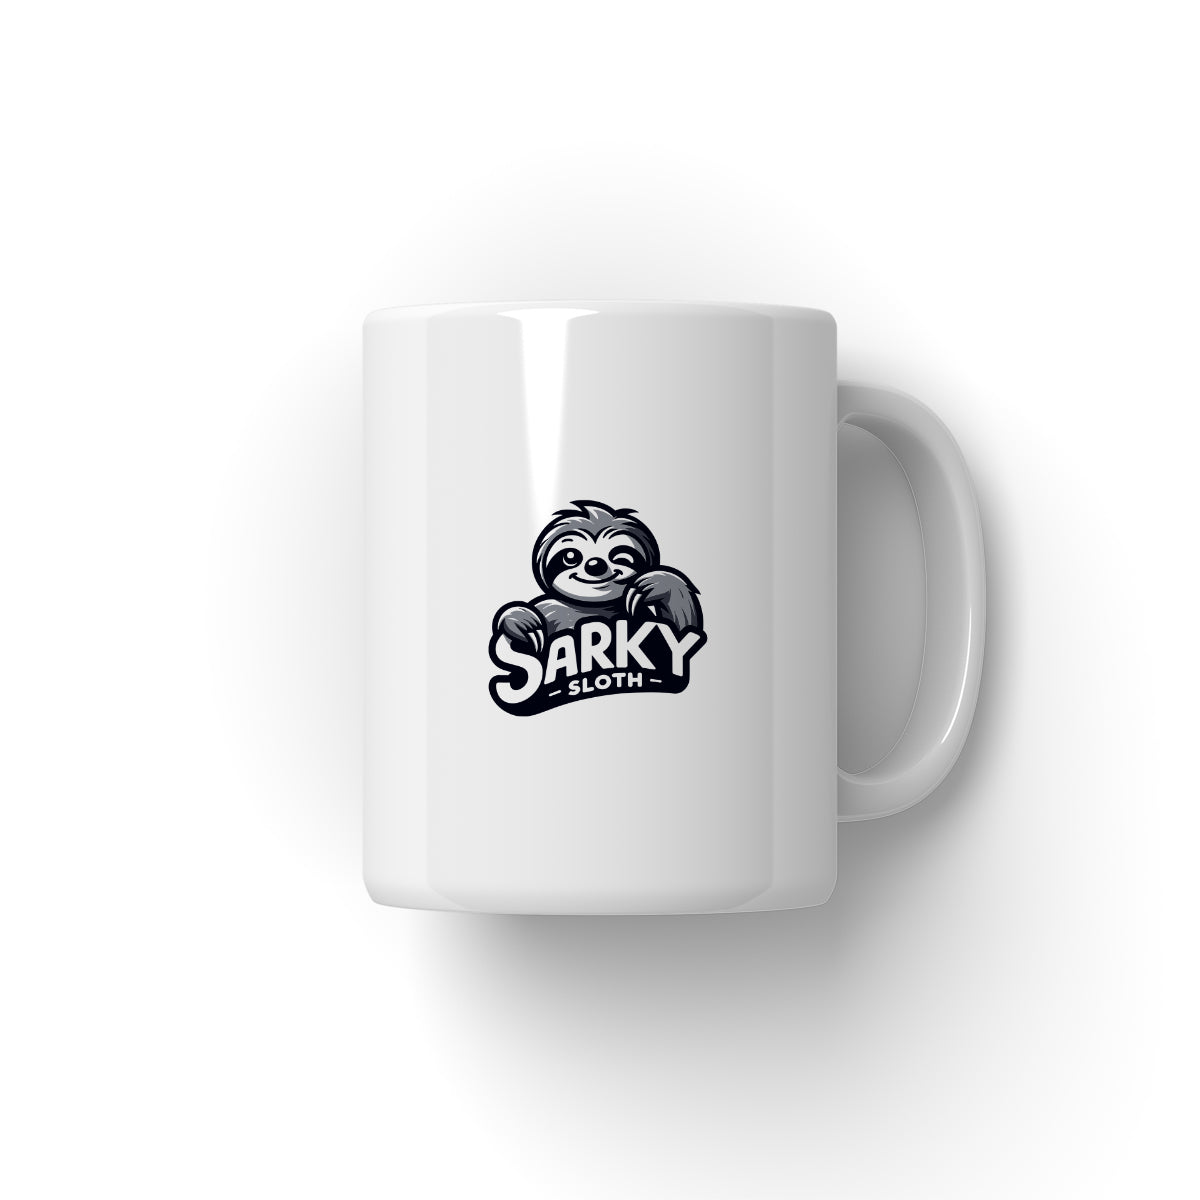 sarky sloth, funny couple mugs, novelty travel mug, funny mugs for boyfriend, novelty mugs for her, novelty coffee travel mugs